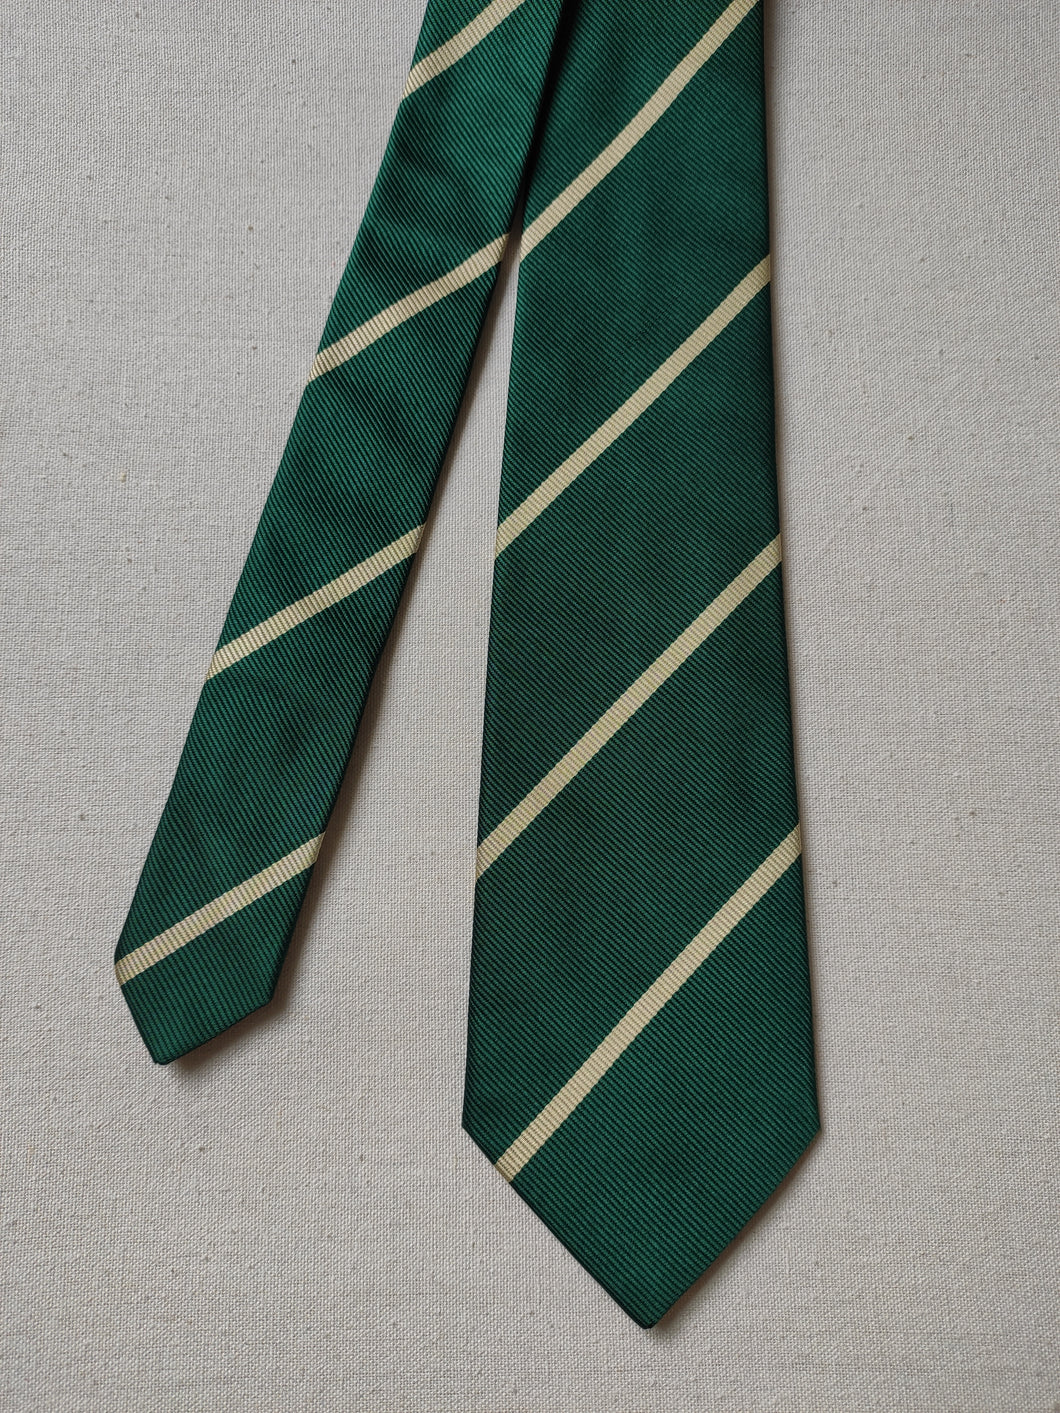 Arthur & Fox cravate club verte en soie Made in Italy